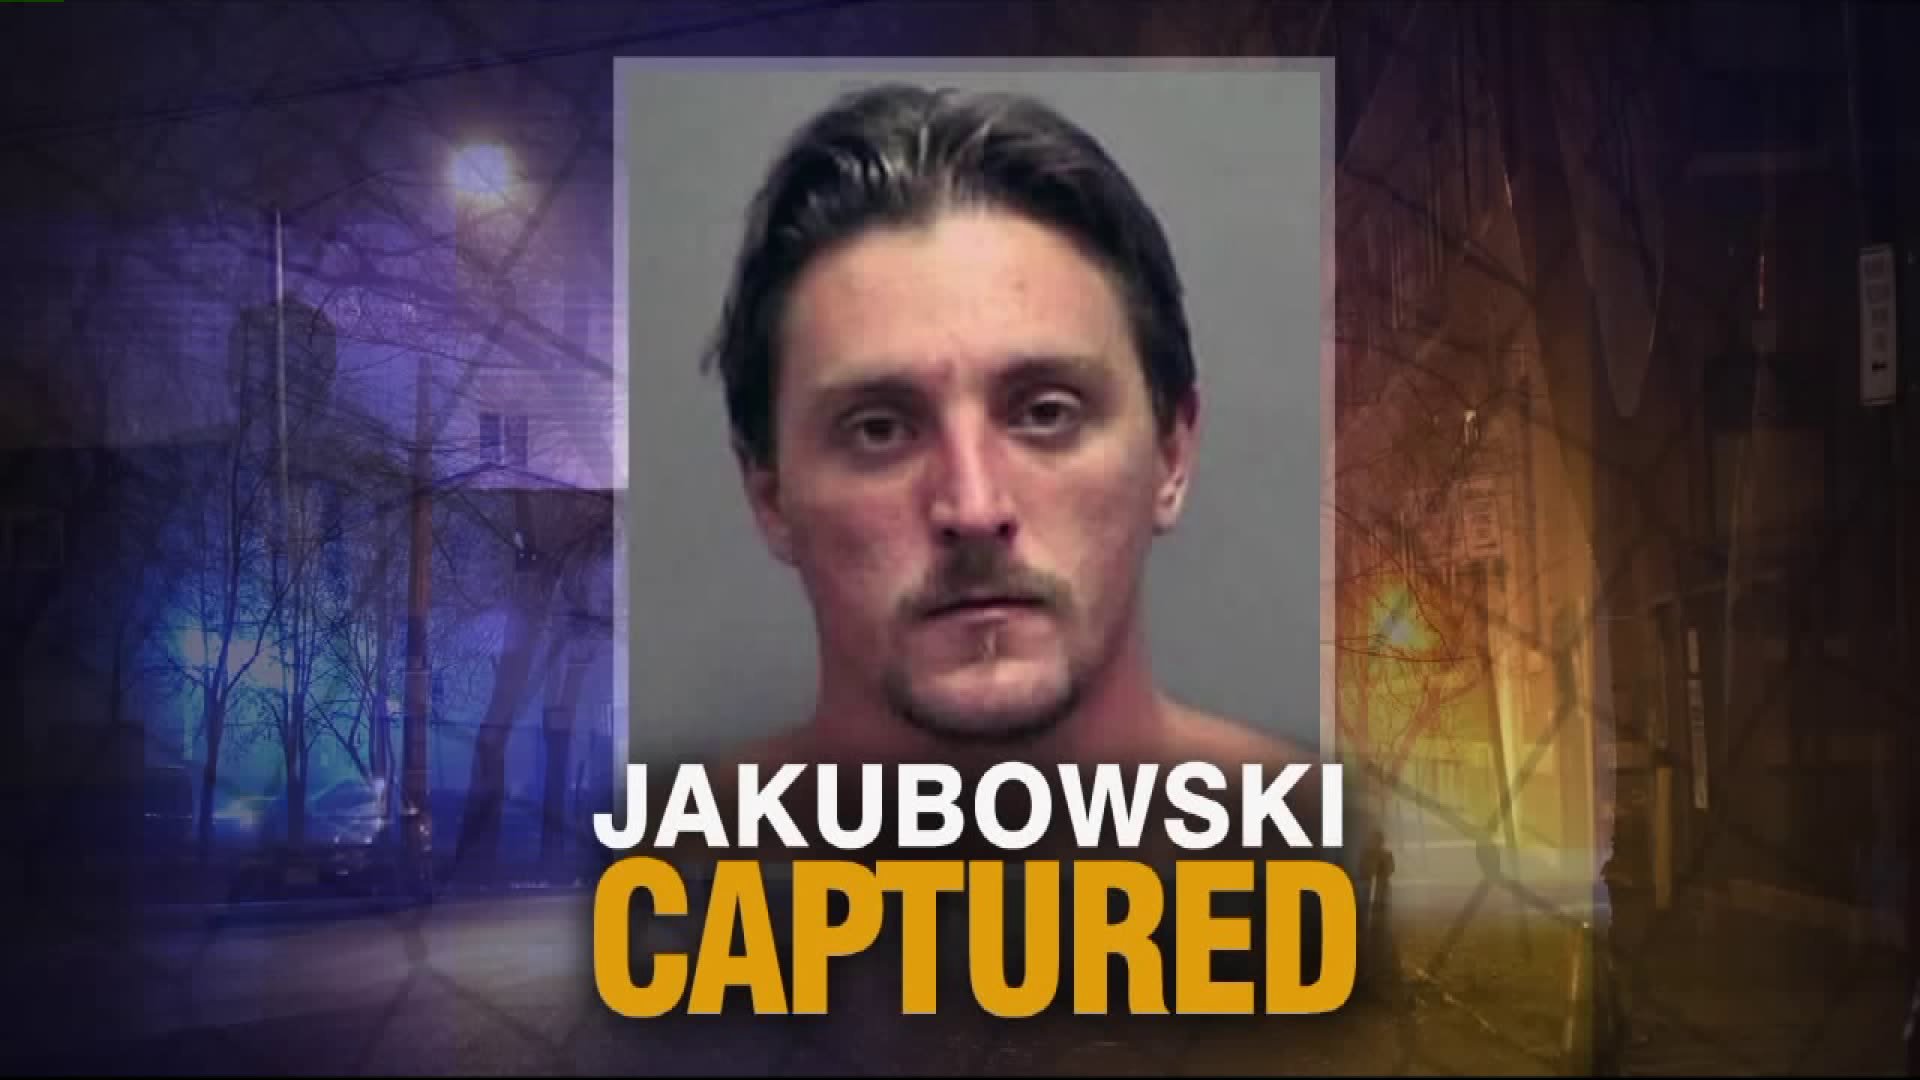 Defense Attorney Casey Hoff: What's next for Jakubowski